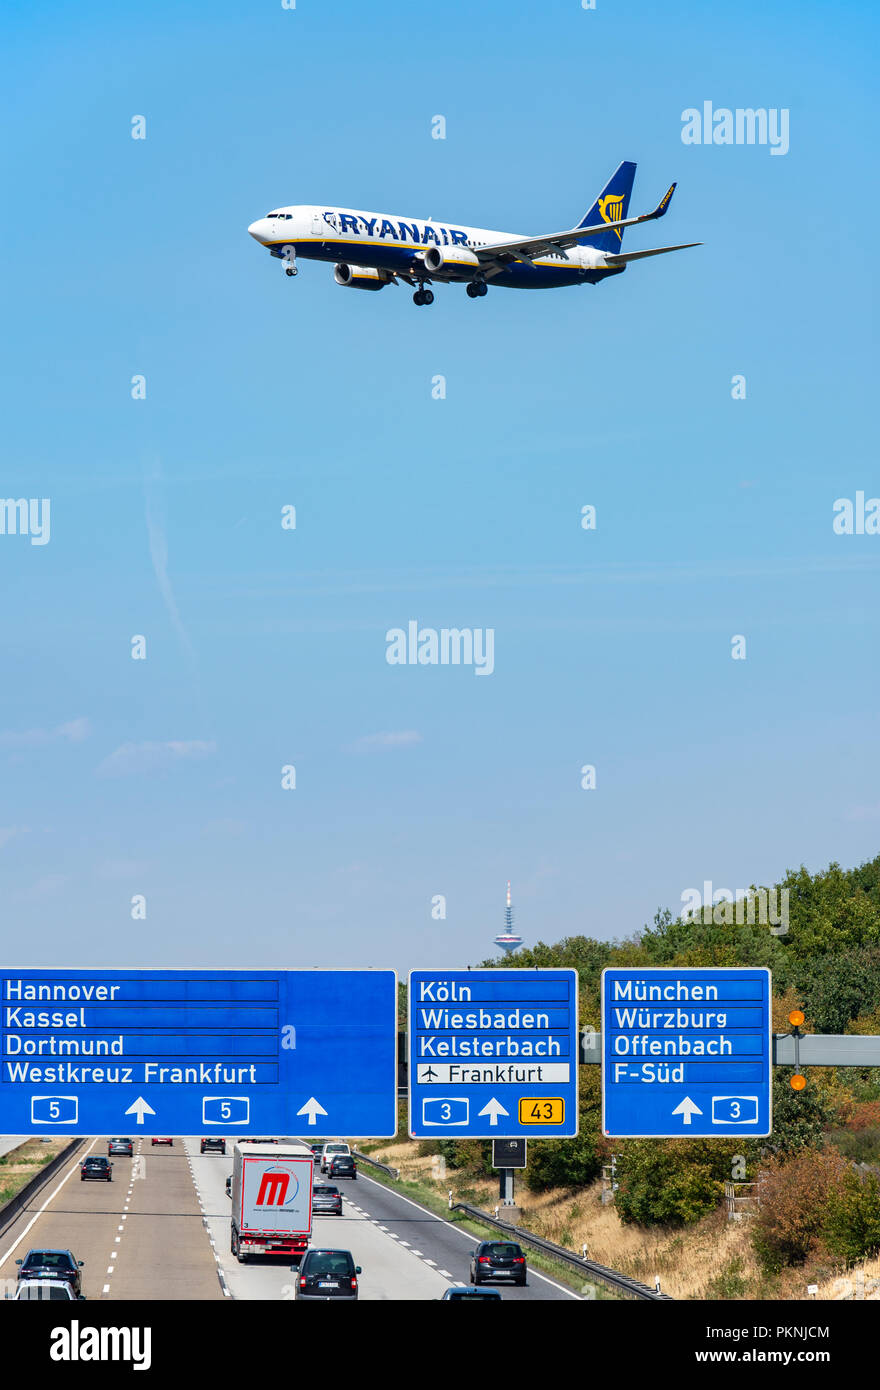 Ryanair aircraft landing at Frankfurt Airport Stock Photo